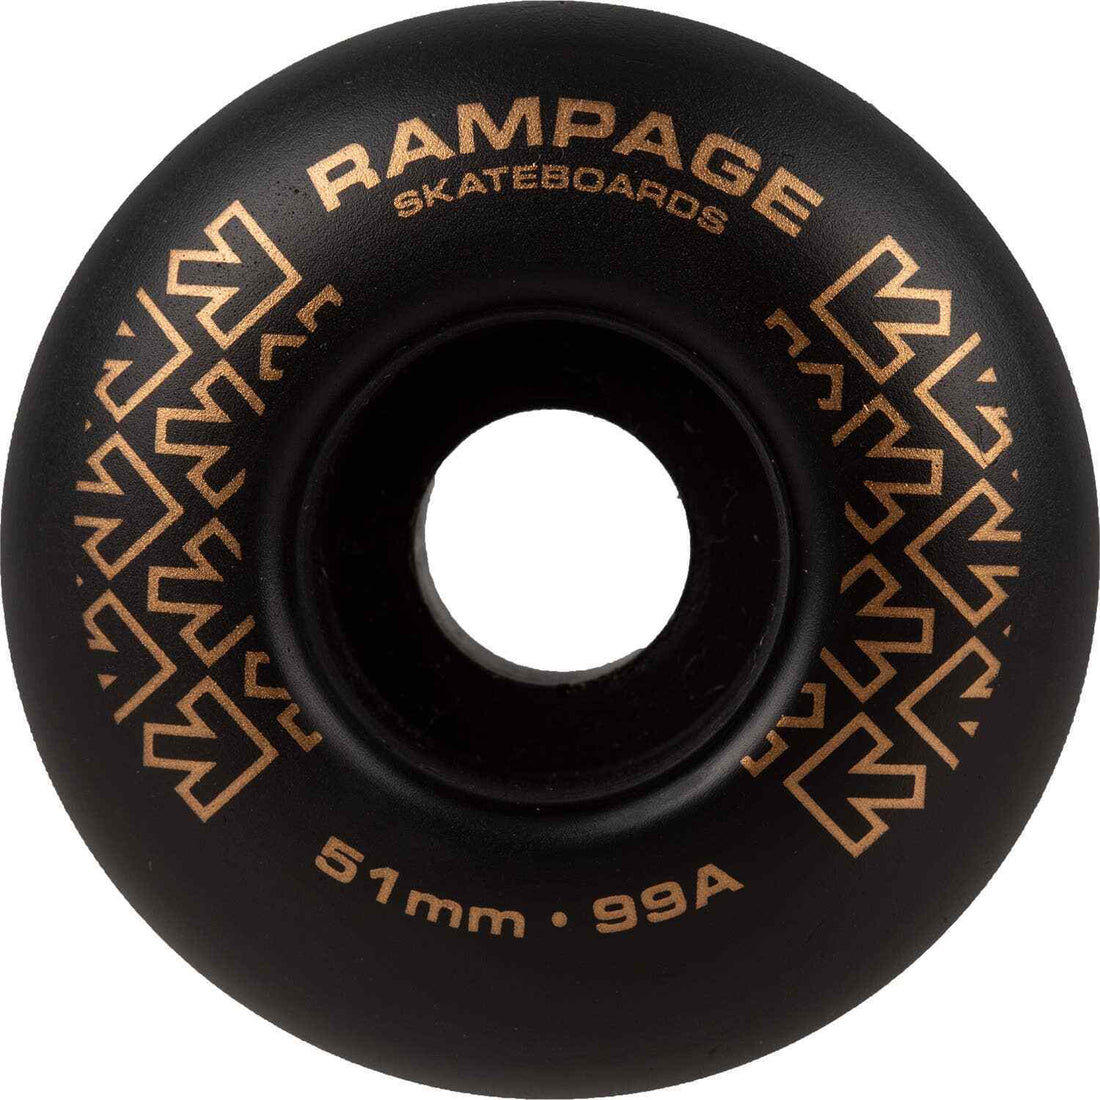 Rampage 99A Skateboard Wheels Black Gold